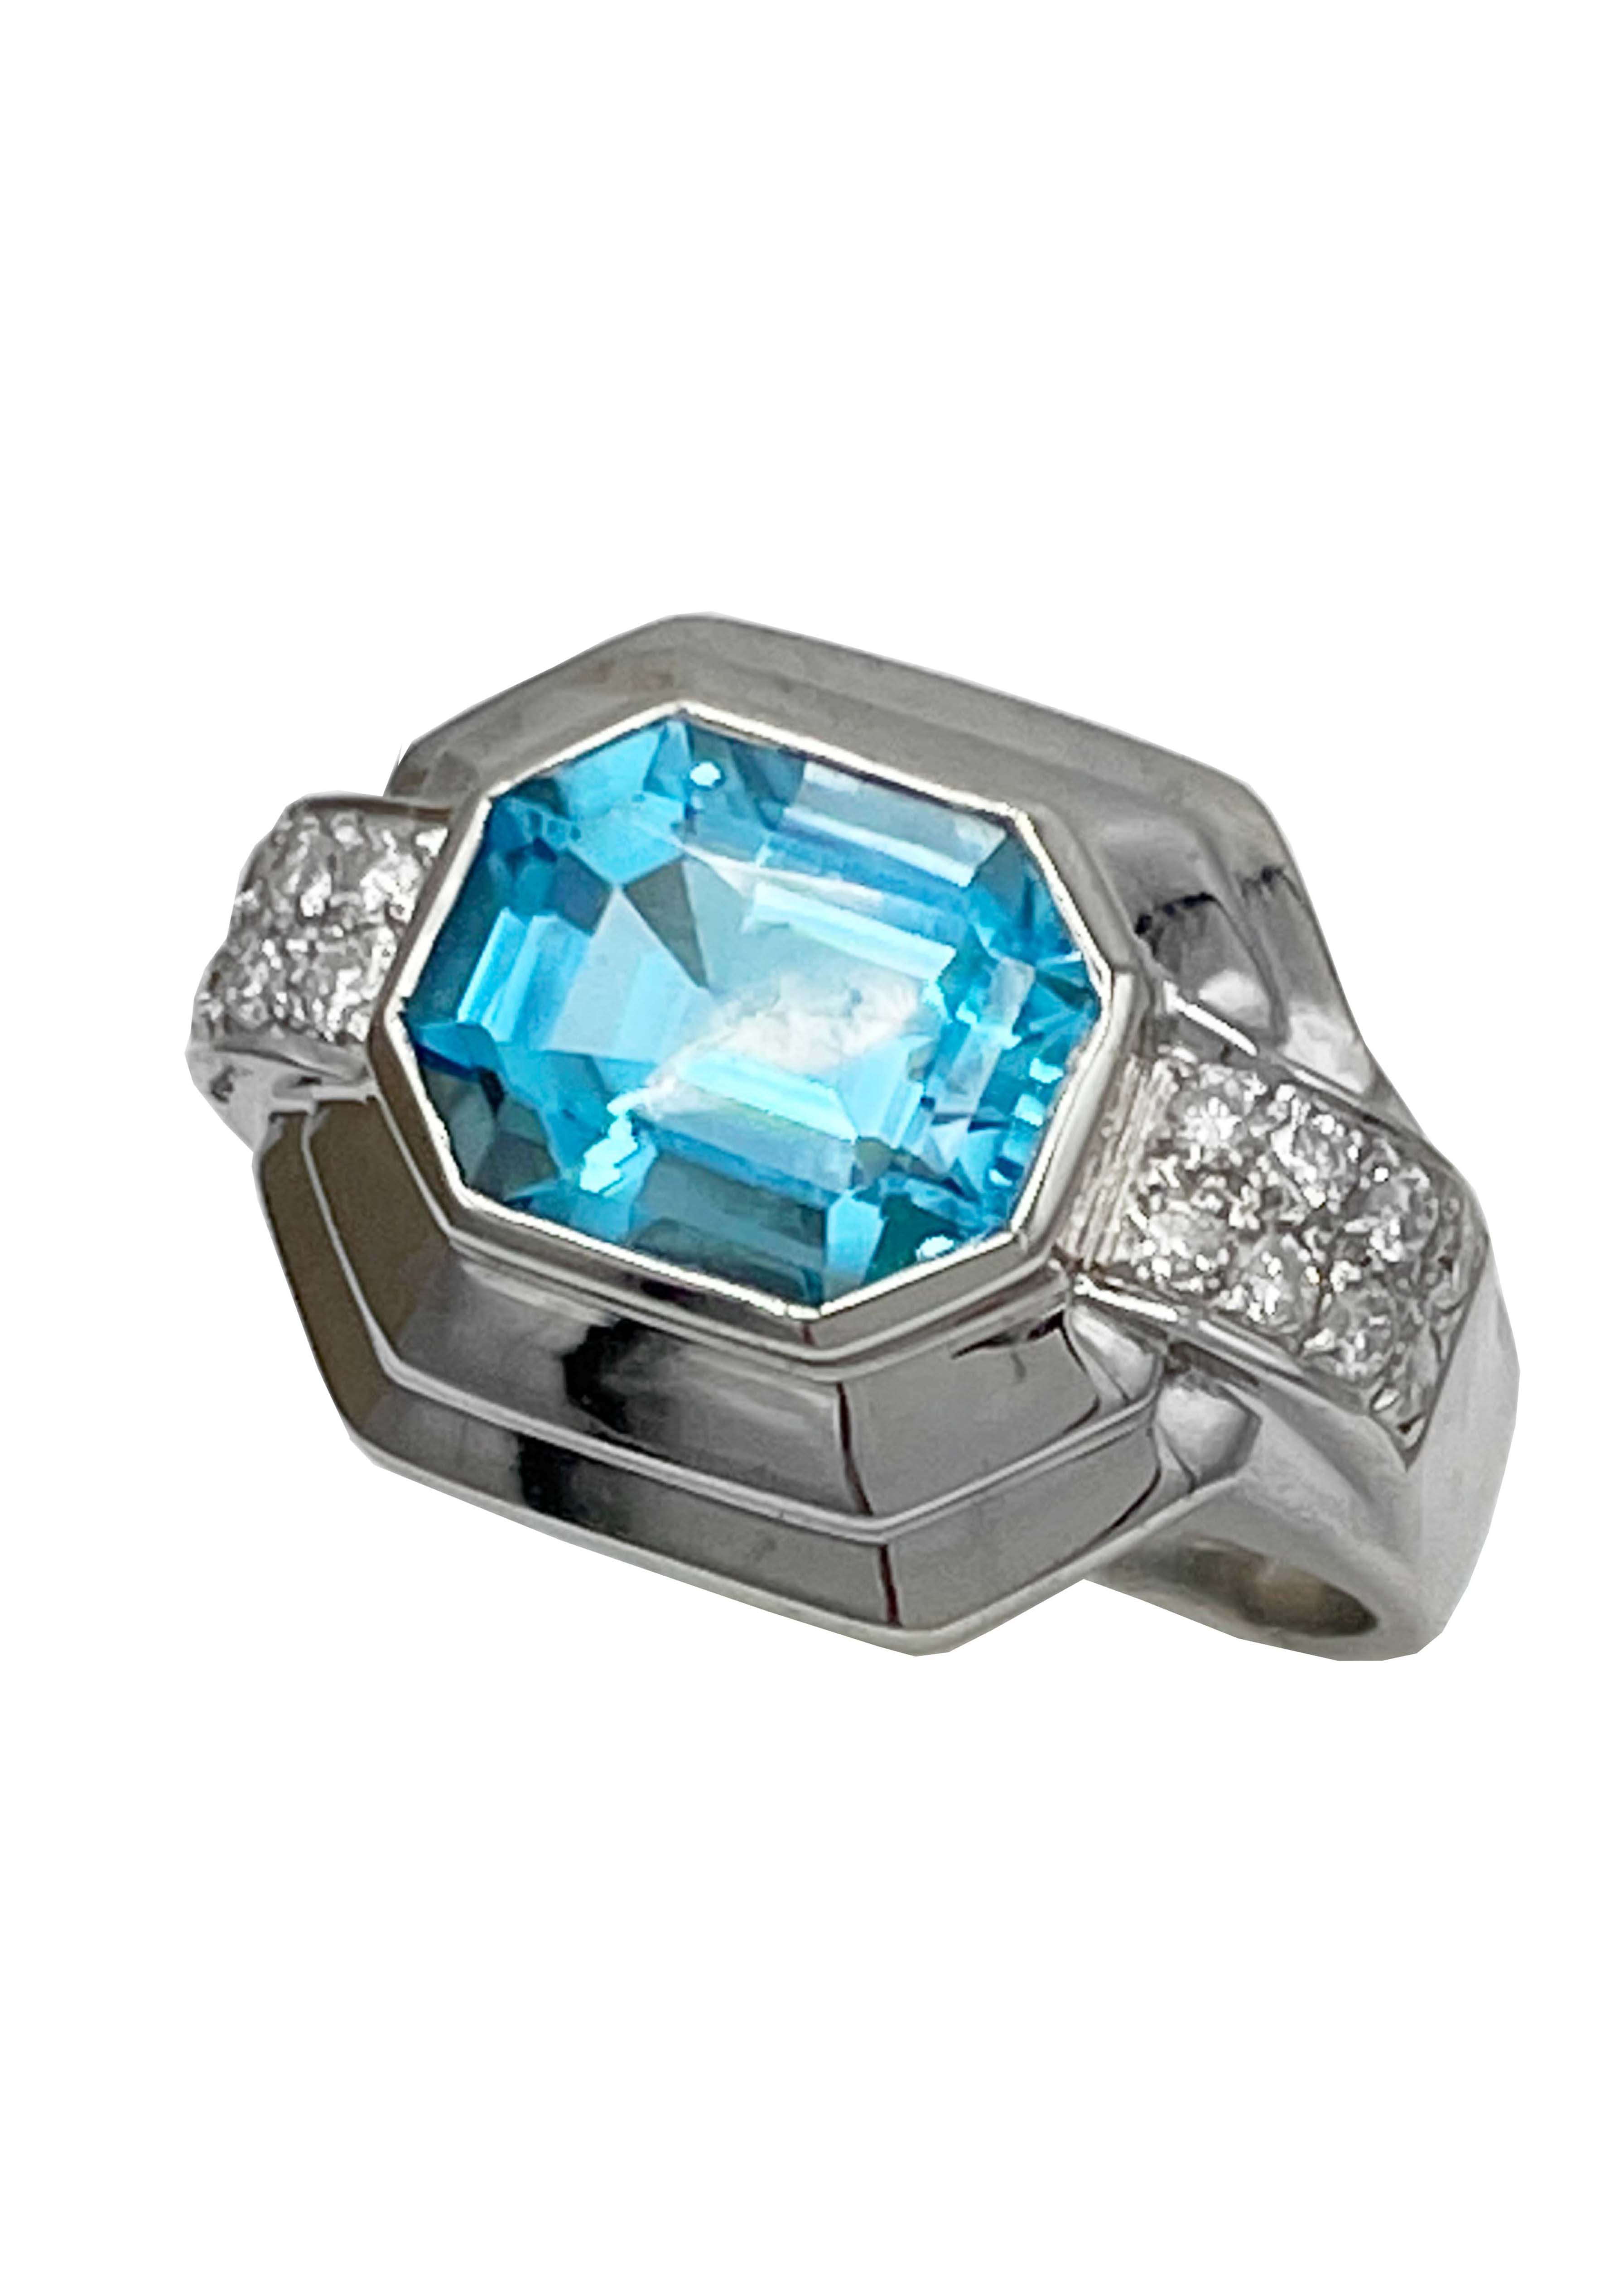 18k White Gold Art Deco Blue Topaz and Diamond Ring Image